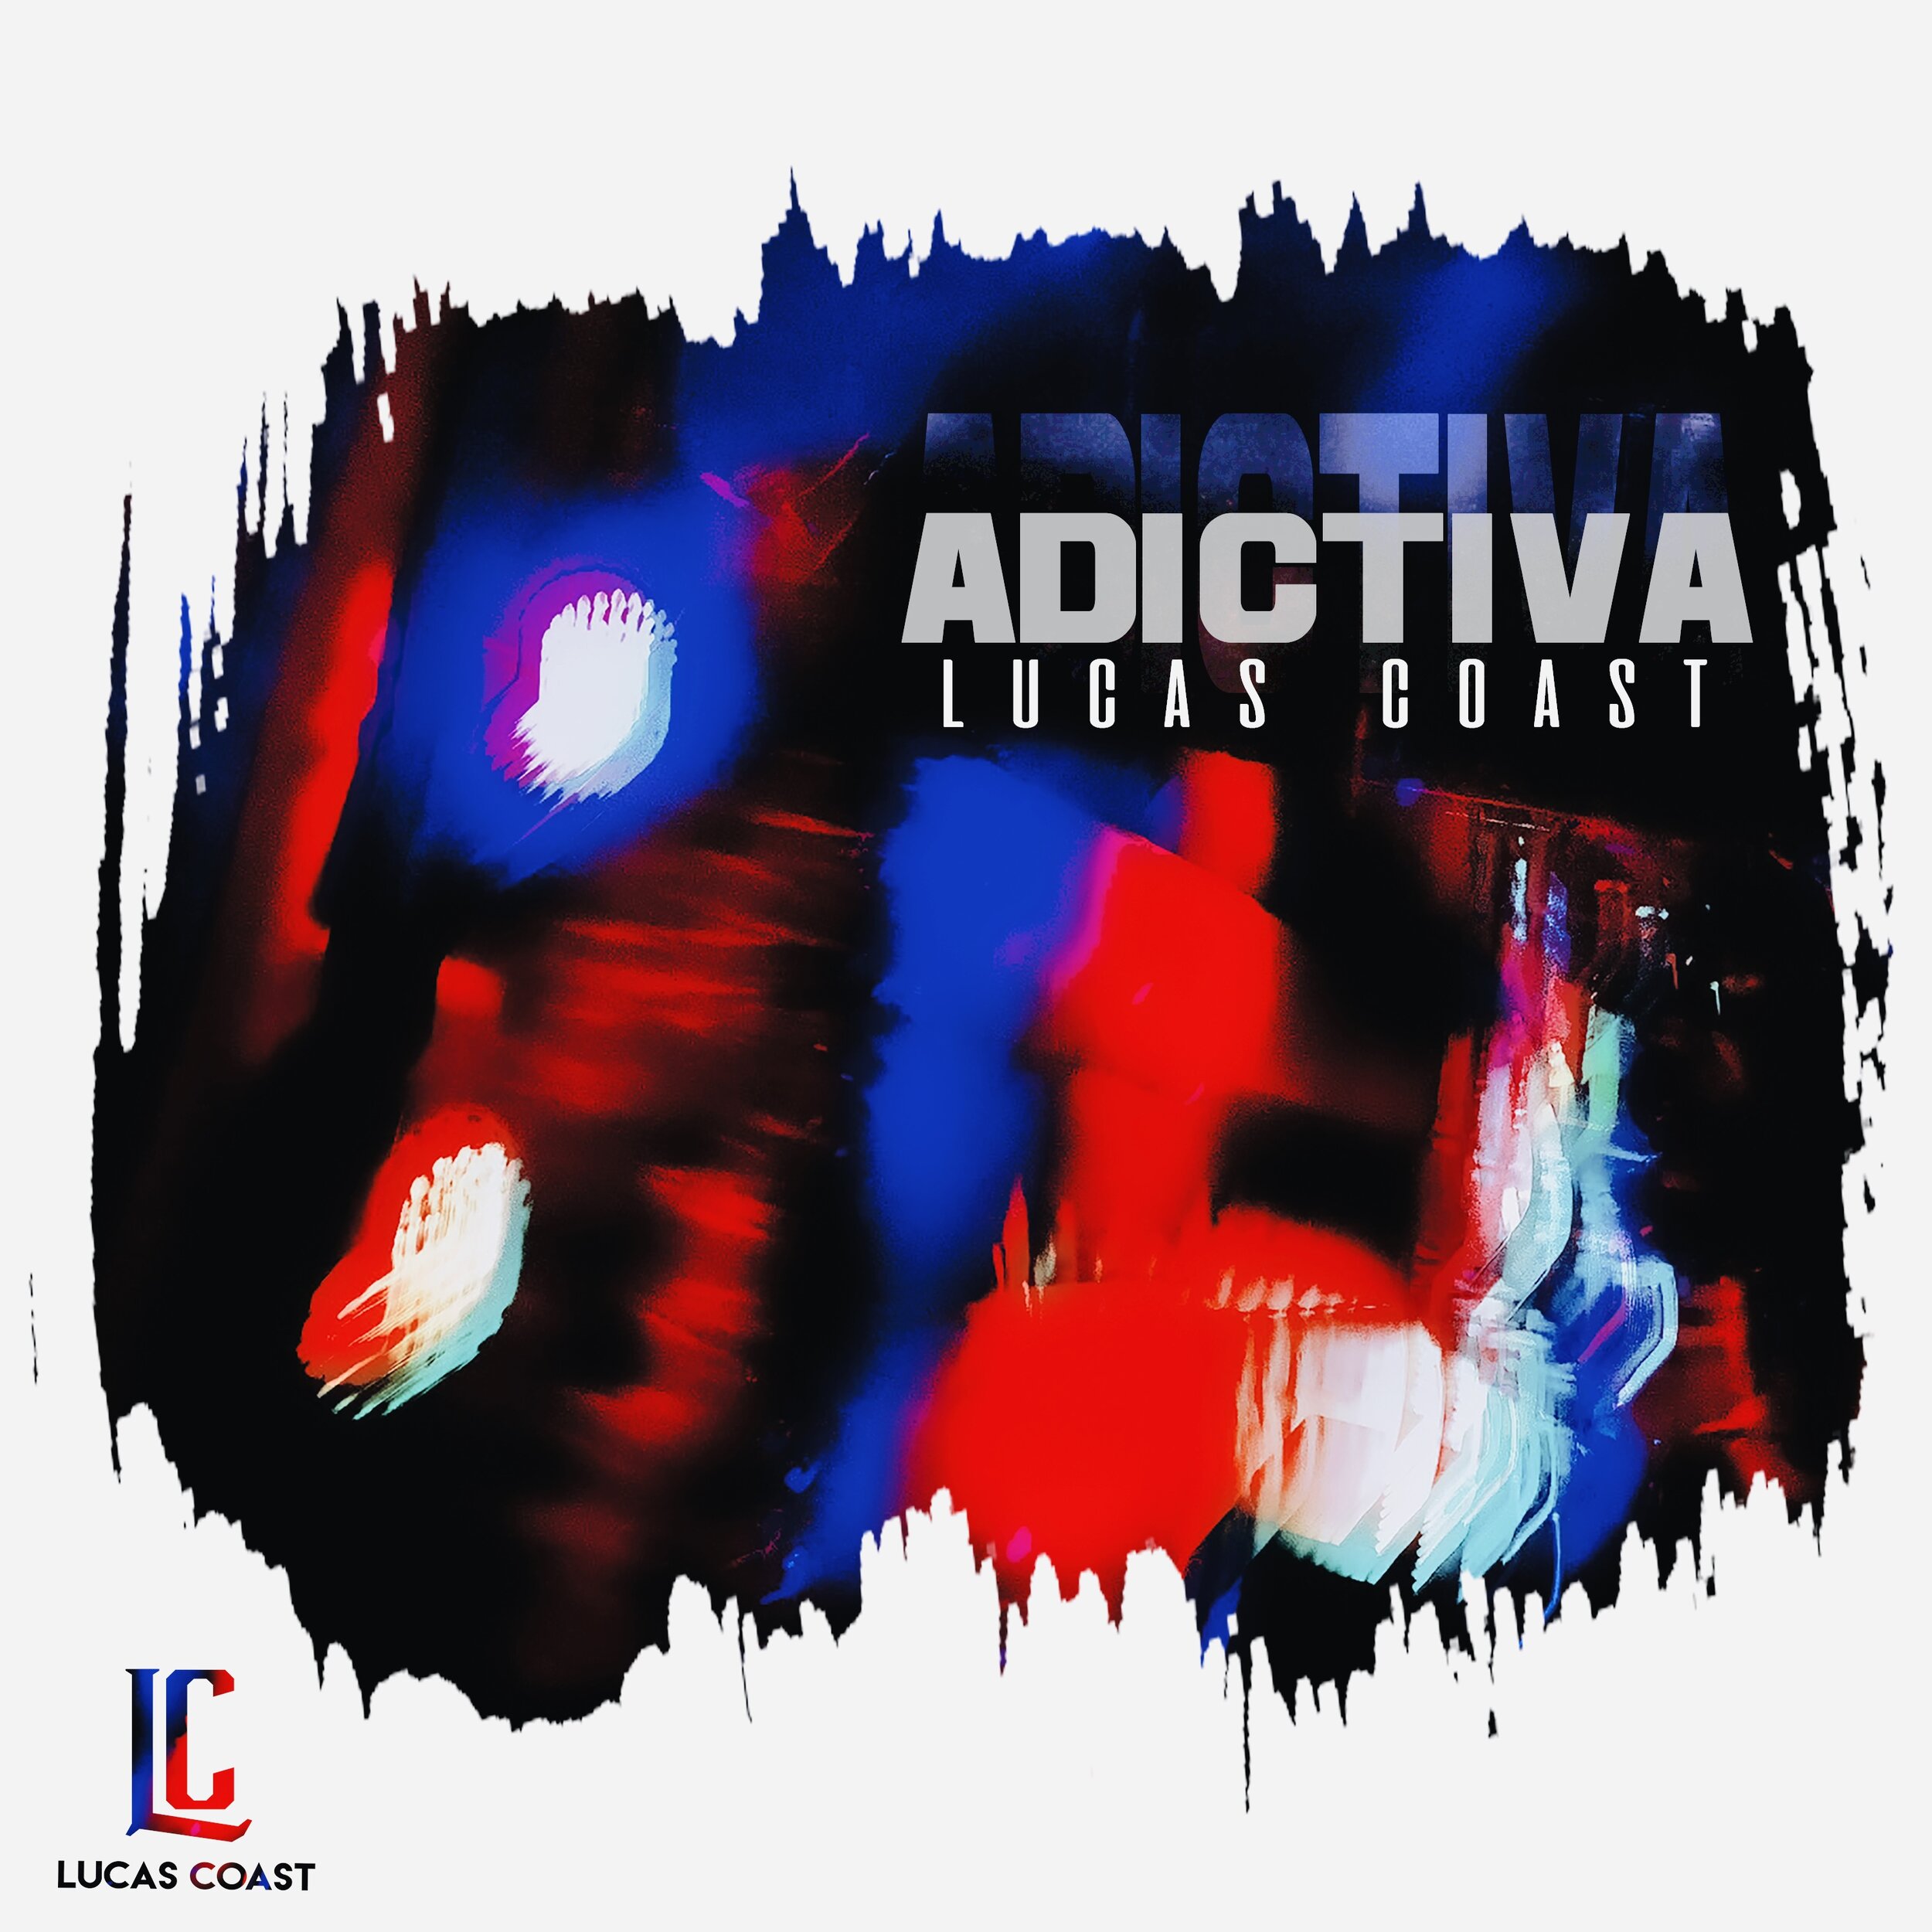 Lucas Coast - Adictiva - Final Artwork.jpg